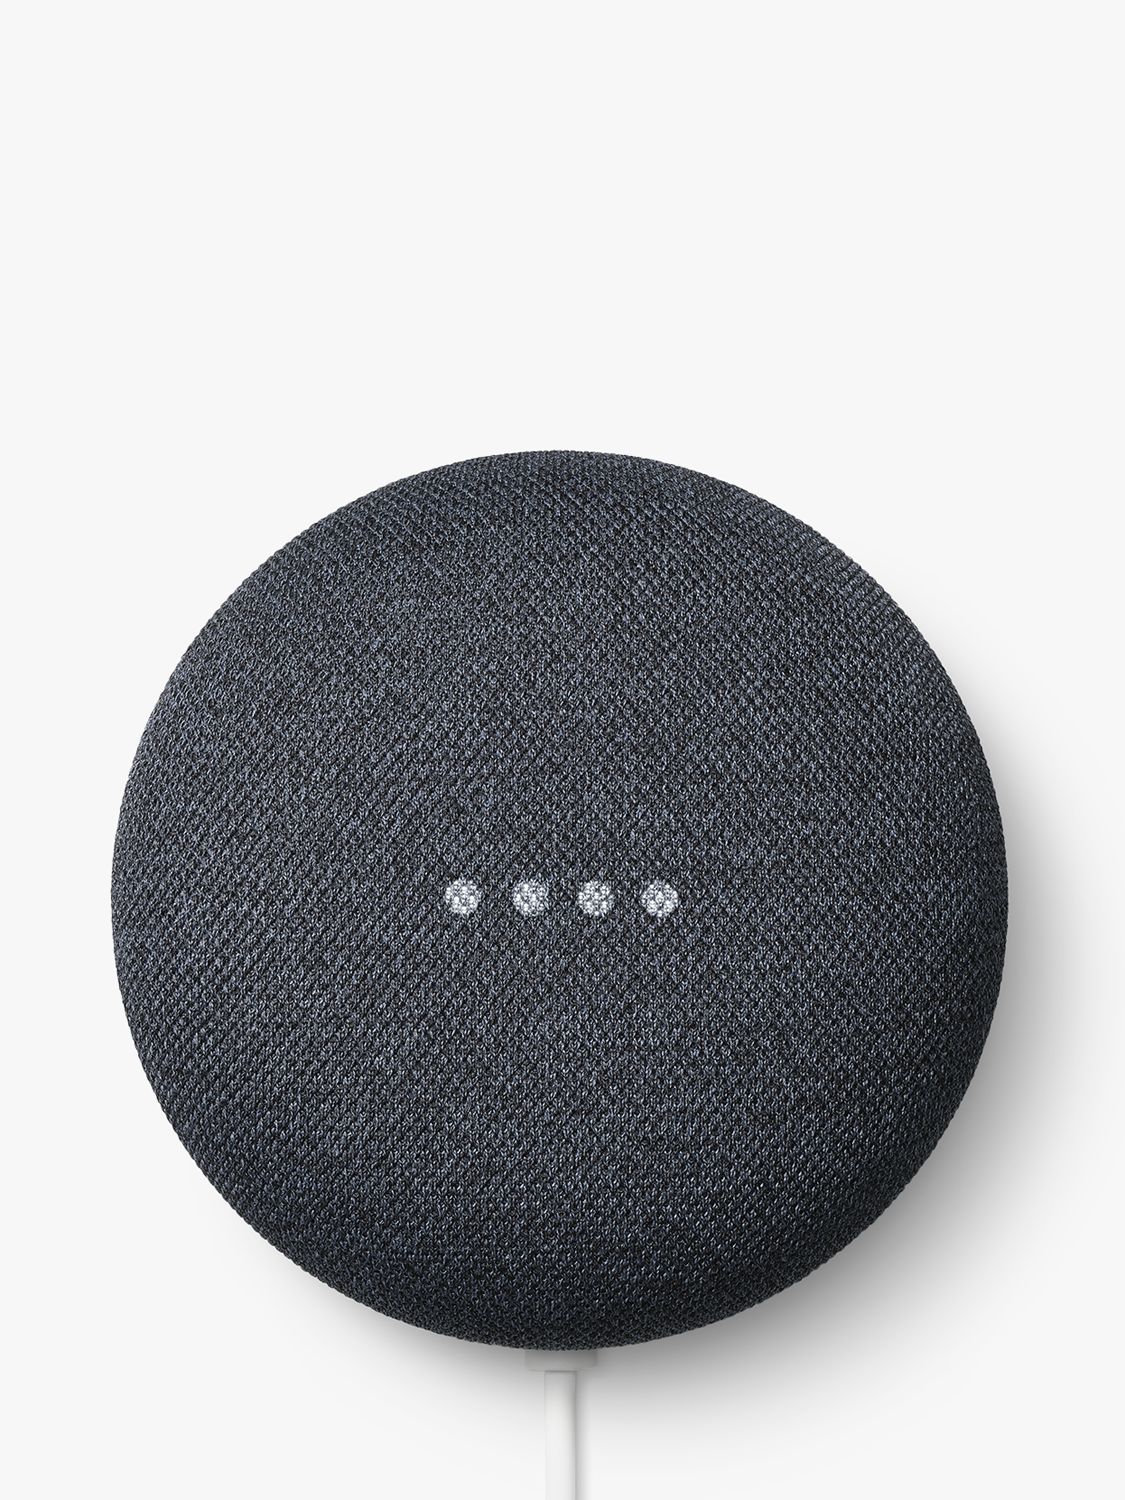 Google Nest Mini Hands-Free Smart Speaker, 2nd Gen